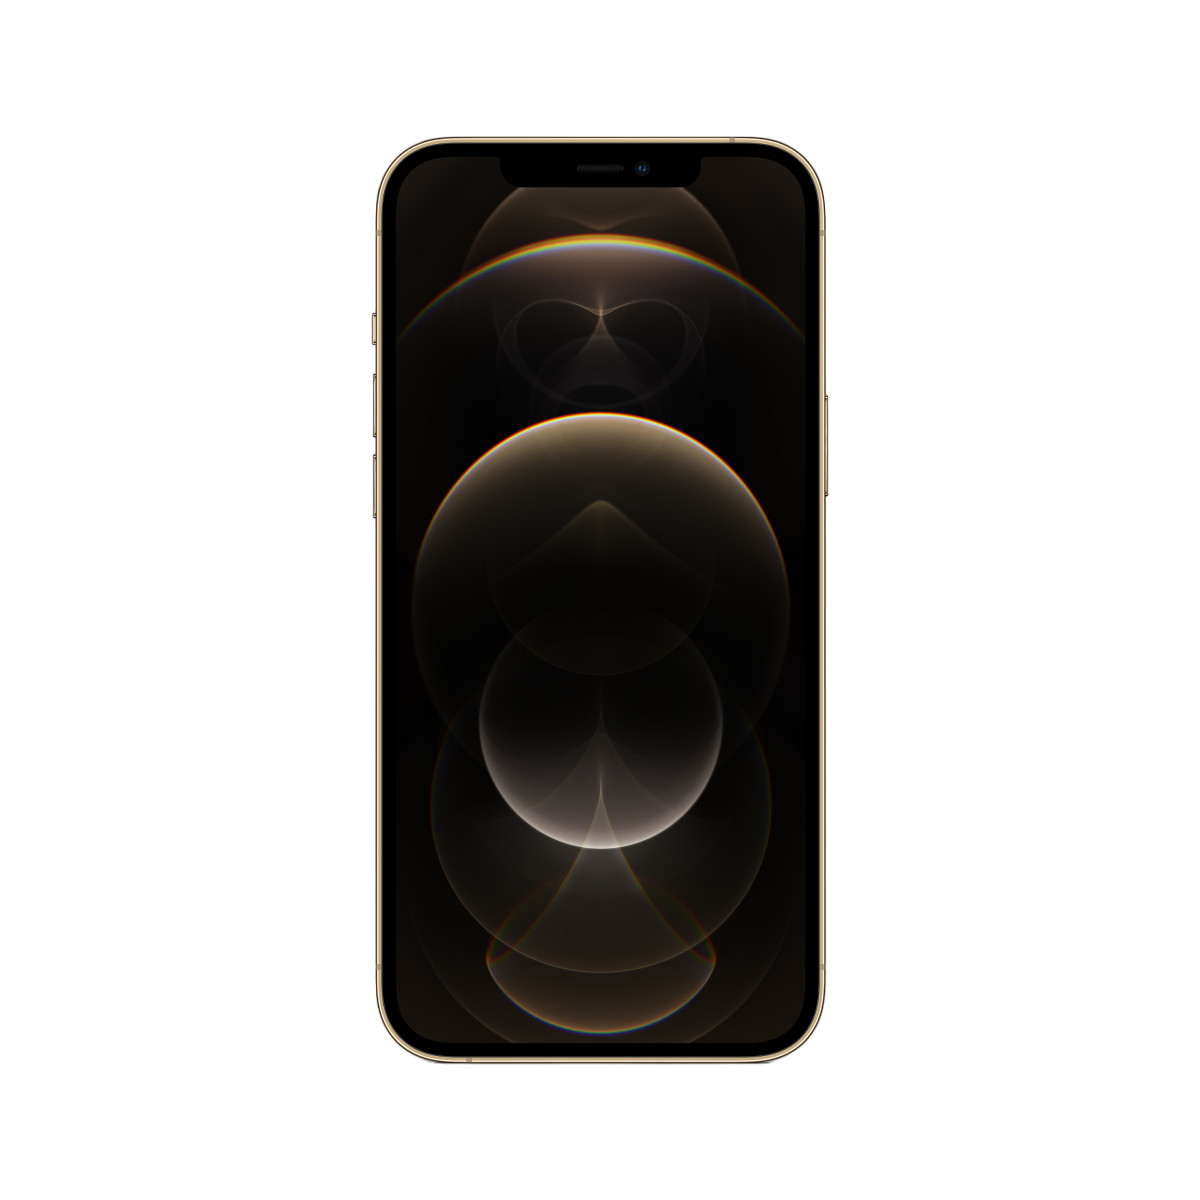 APPLE REFURBISHED(*) iPhone SIM 256 Dual Gold Max Pro 12 GB